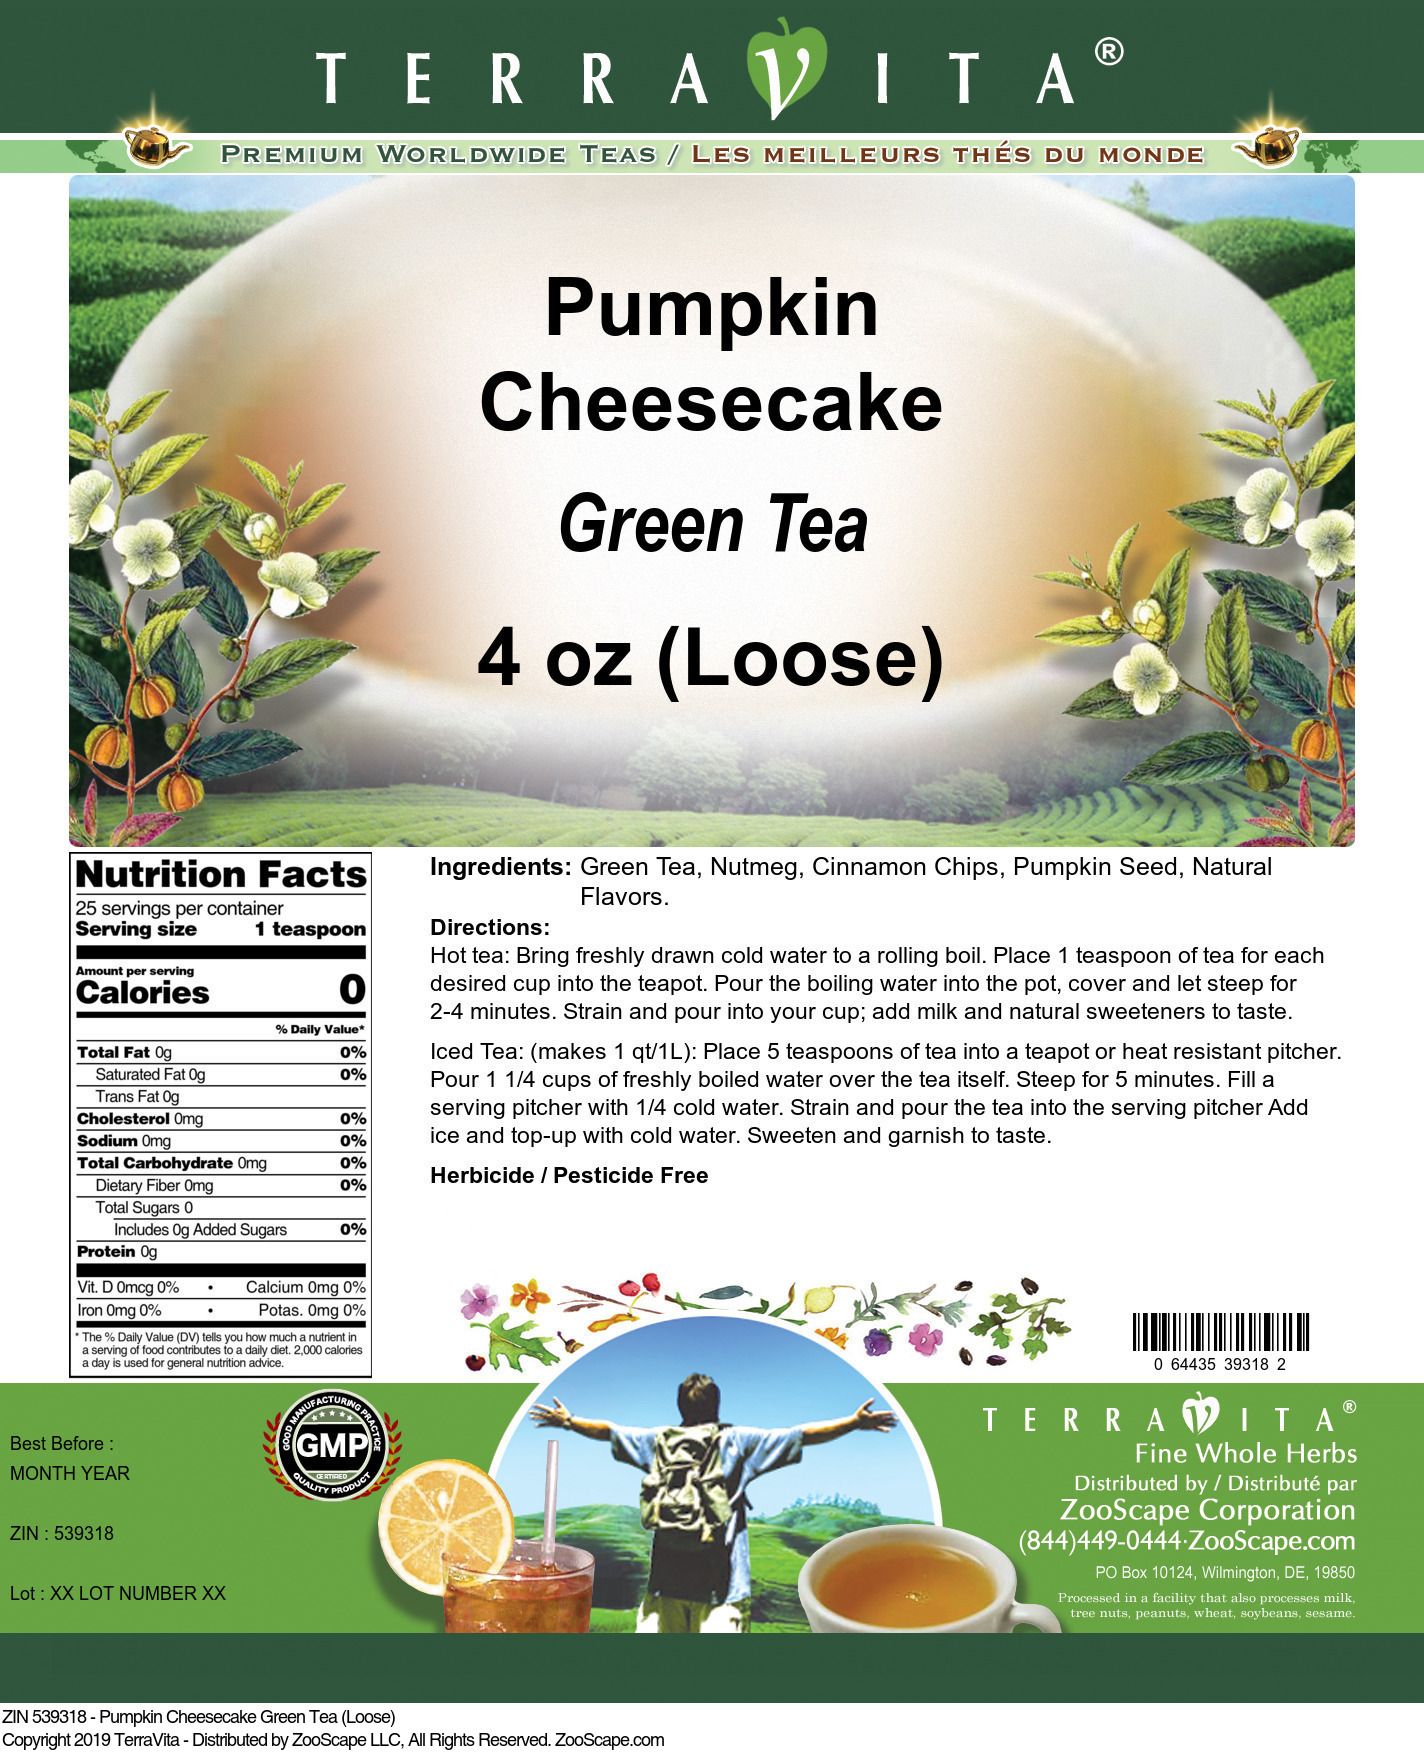 Pumpkin Cheesecake Green Tea (Loose) - Label